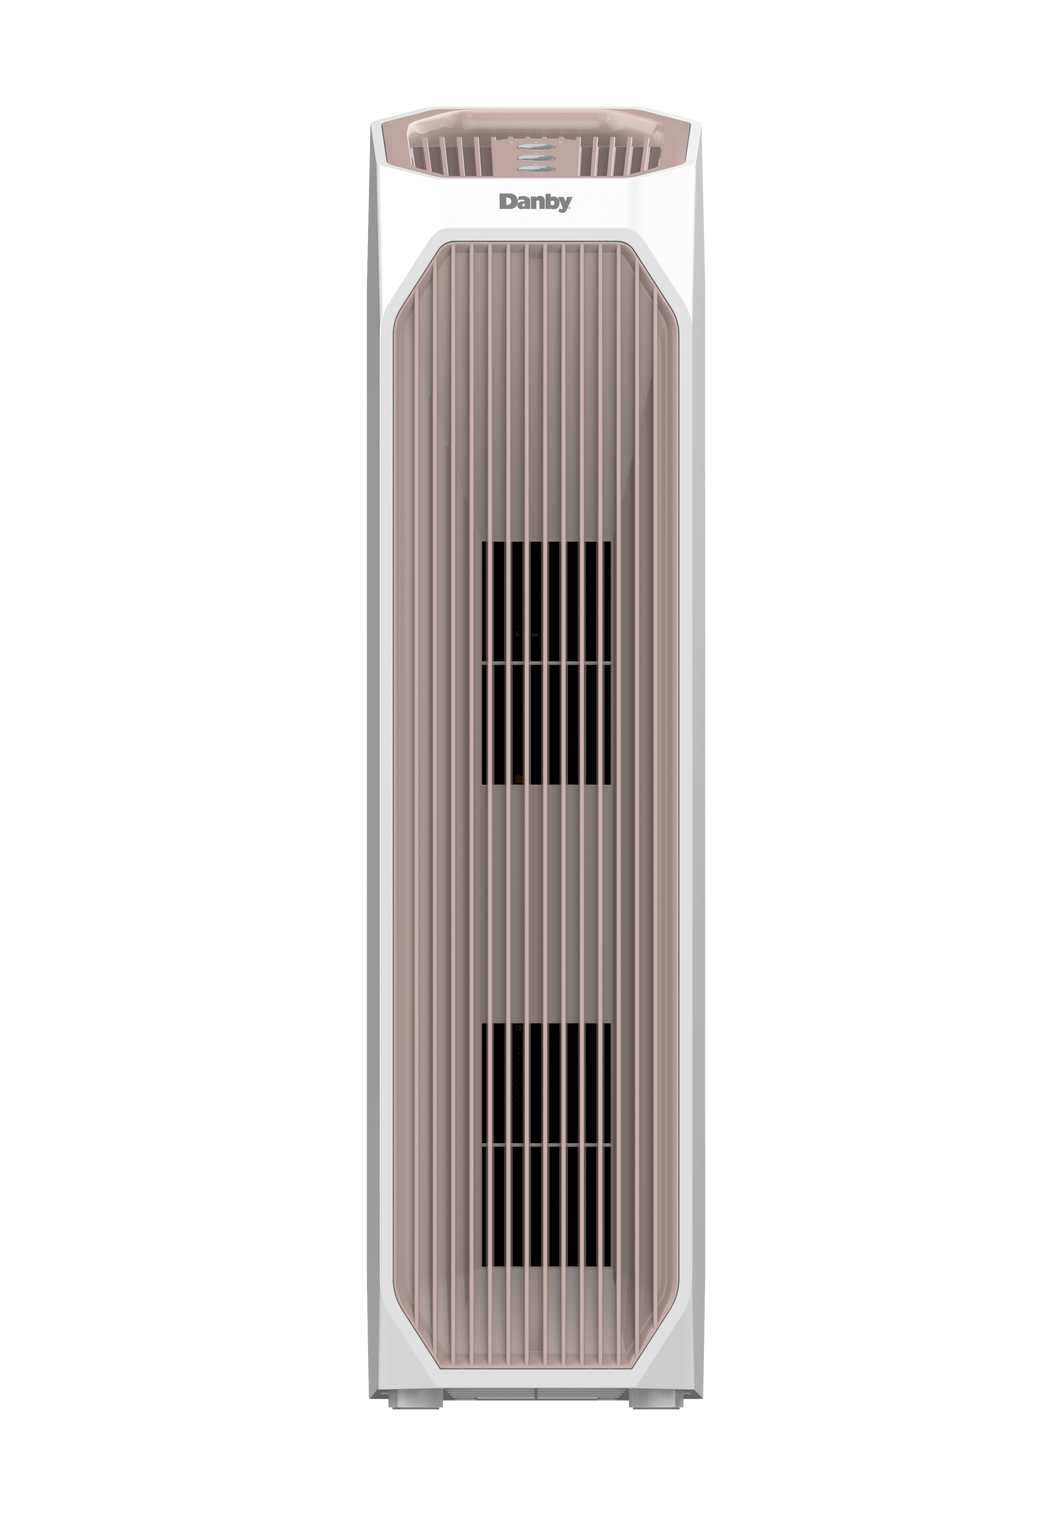 DAP143BAW-UV - Danby Air Purifier up to 210 sq.ft